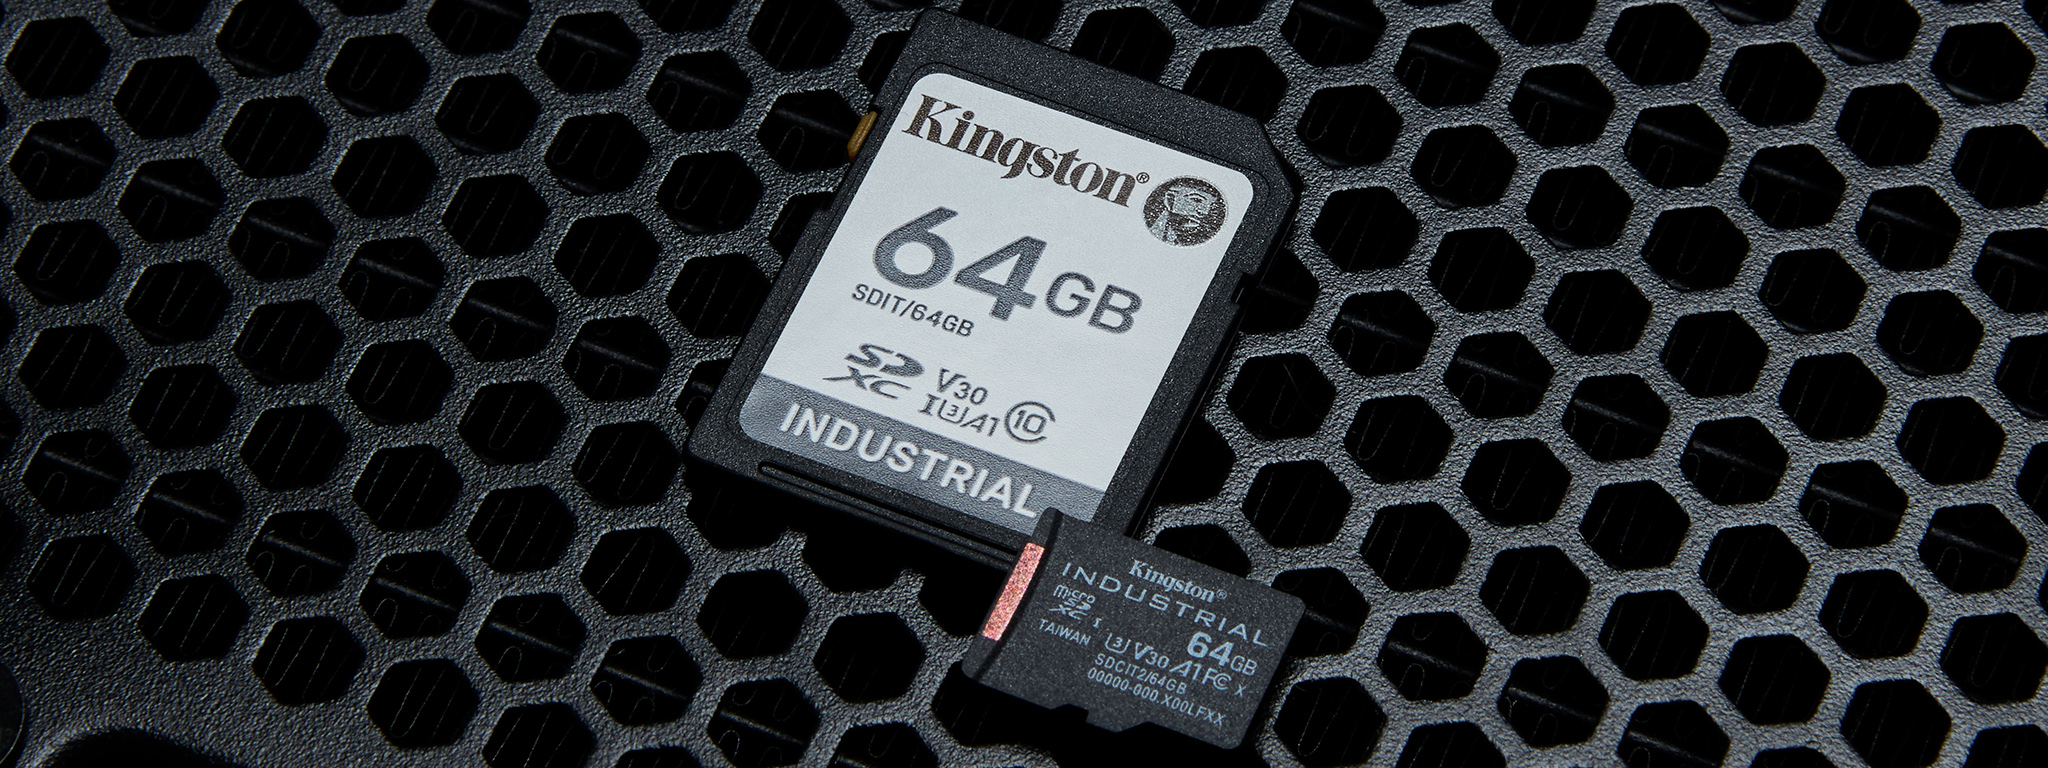 Sepasang kartu microSD Industri Kingston 64GB terdapat di atas permukaan logam yang usang